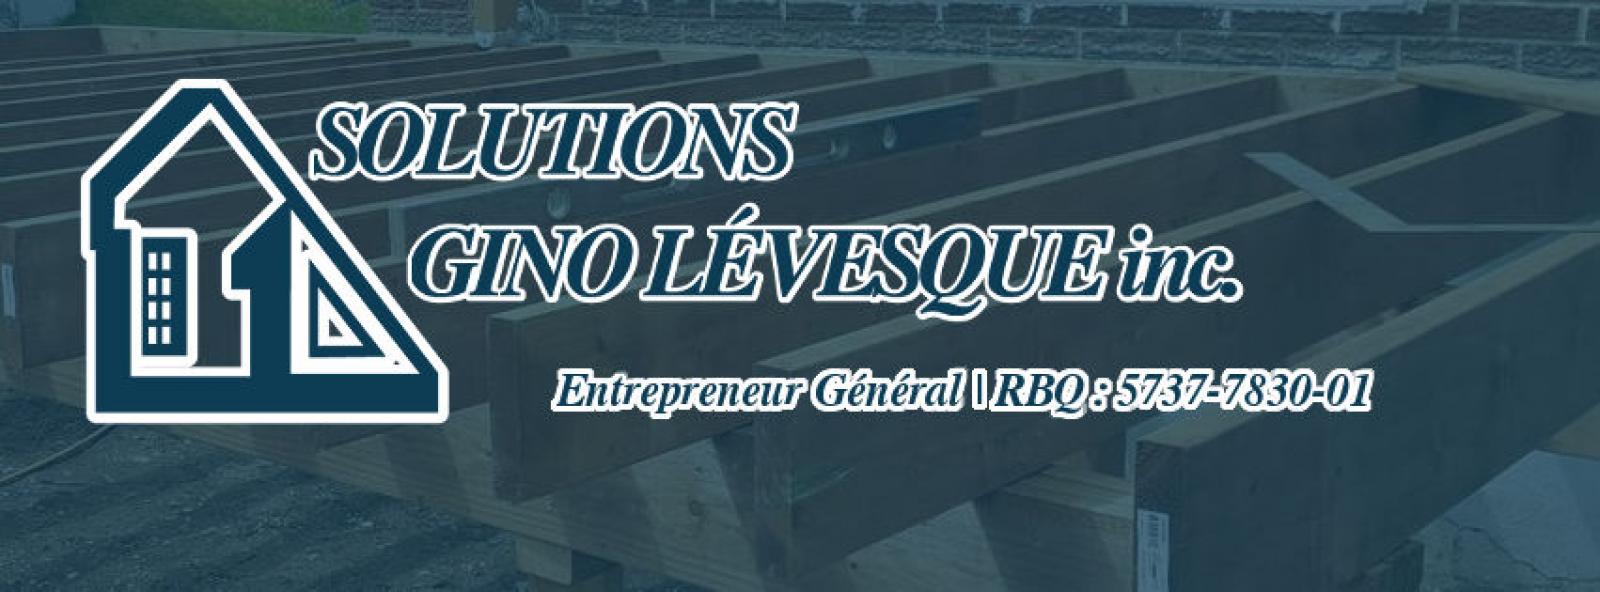 Solutions Gino Lévesque inc. Logo